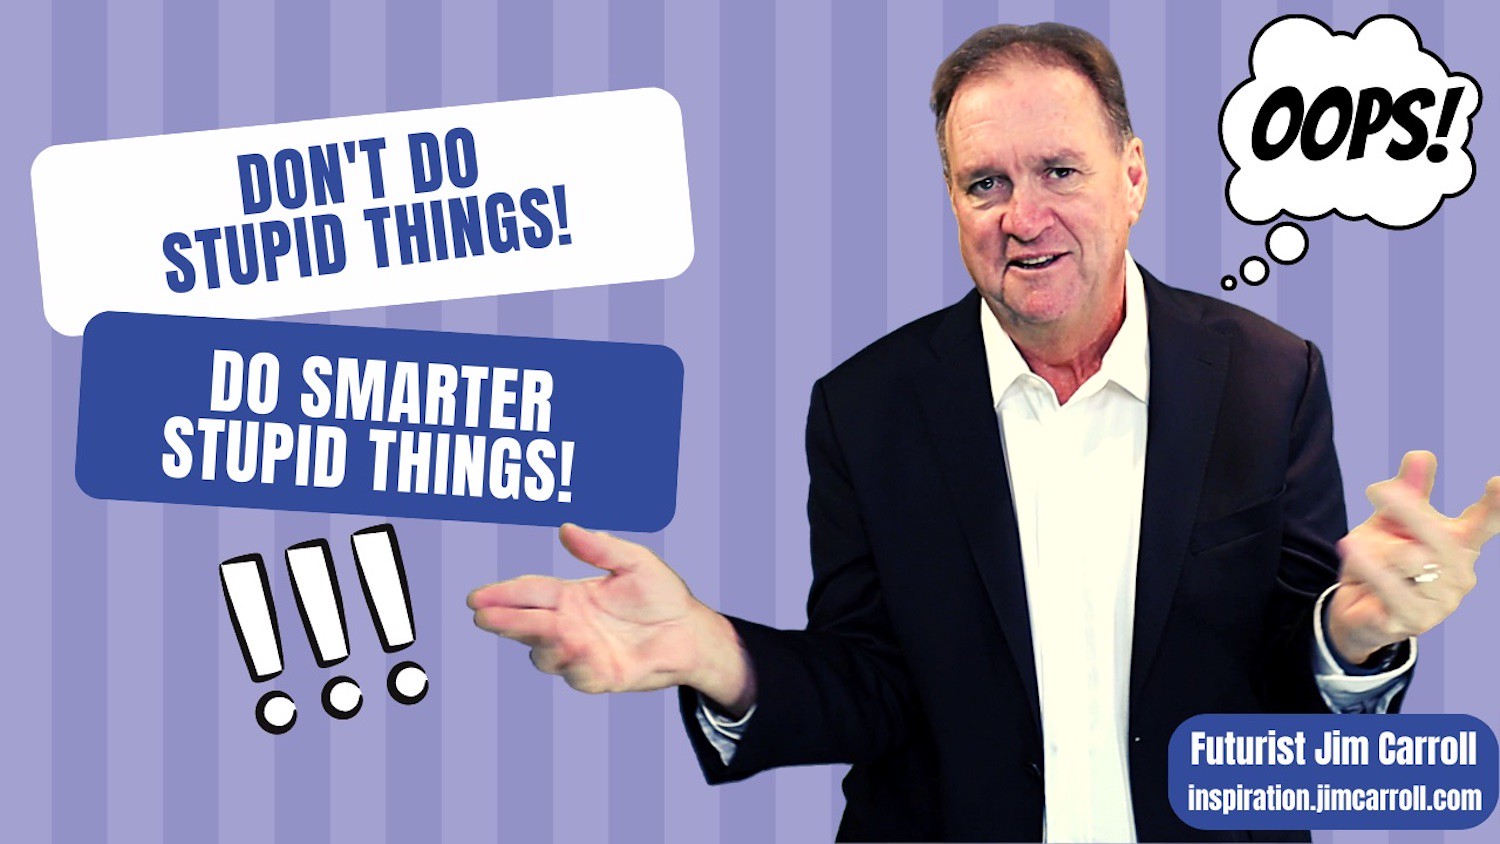 "Don't do stupid things. Do smarter stupid things!" - Futurist Jim Carroll